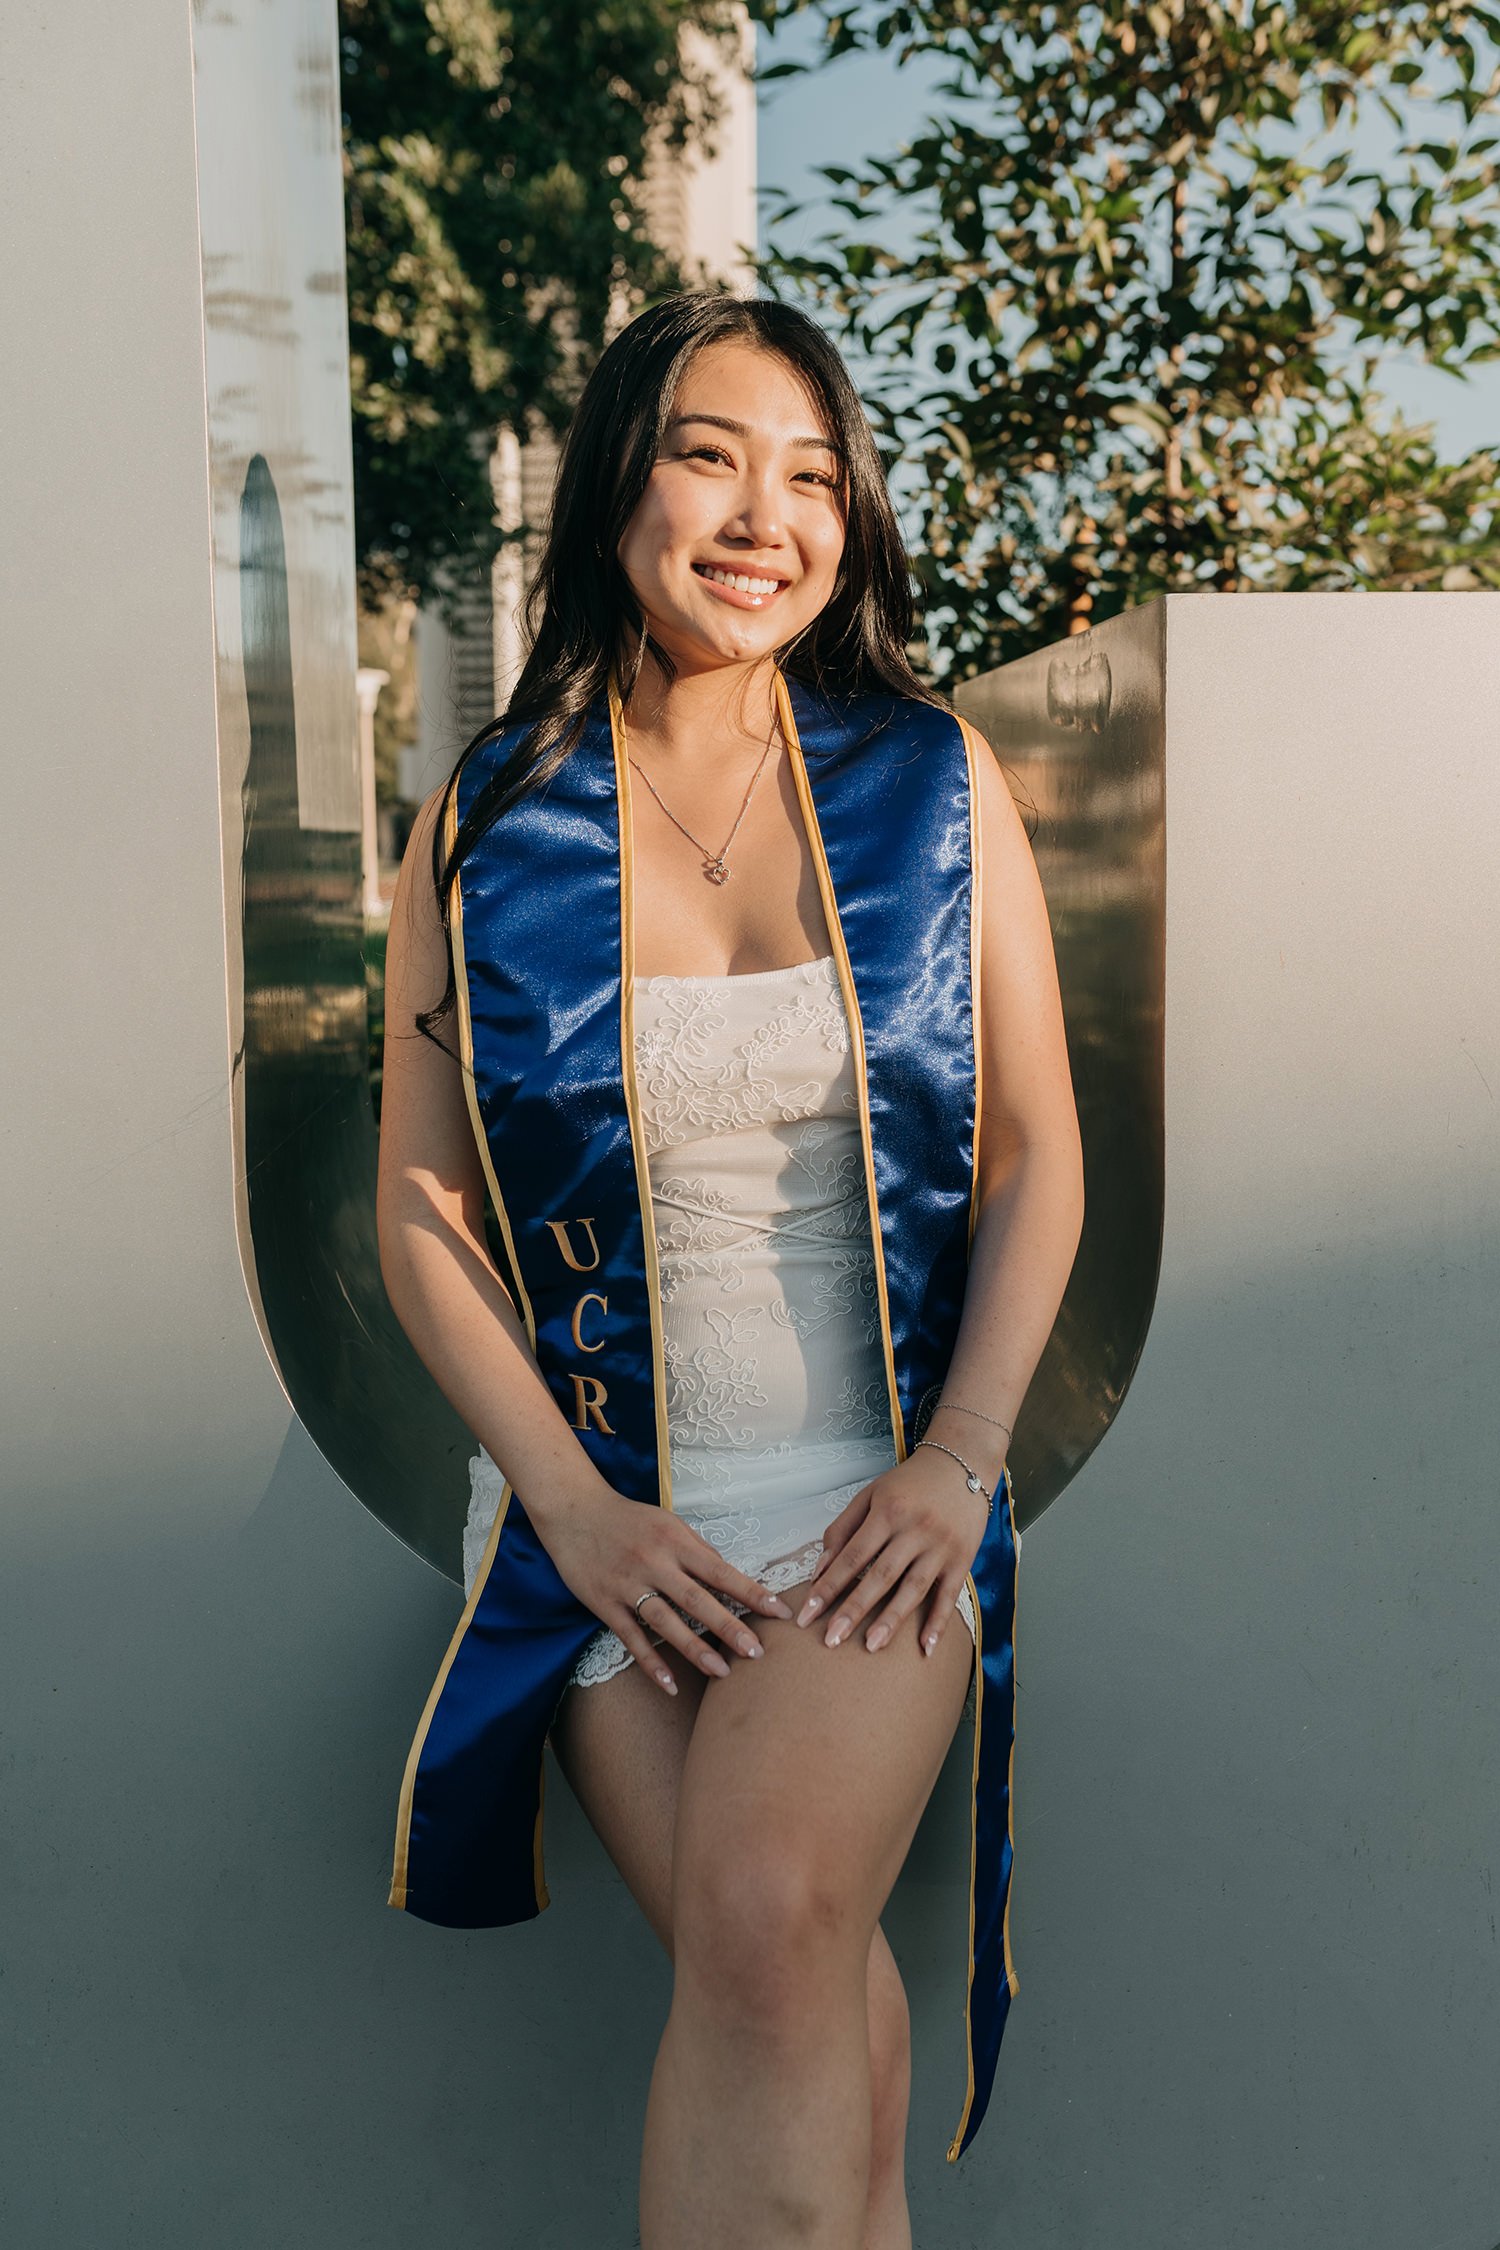 ucr-graduation-portrait-riverside-california-photographer-13.jpg